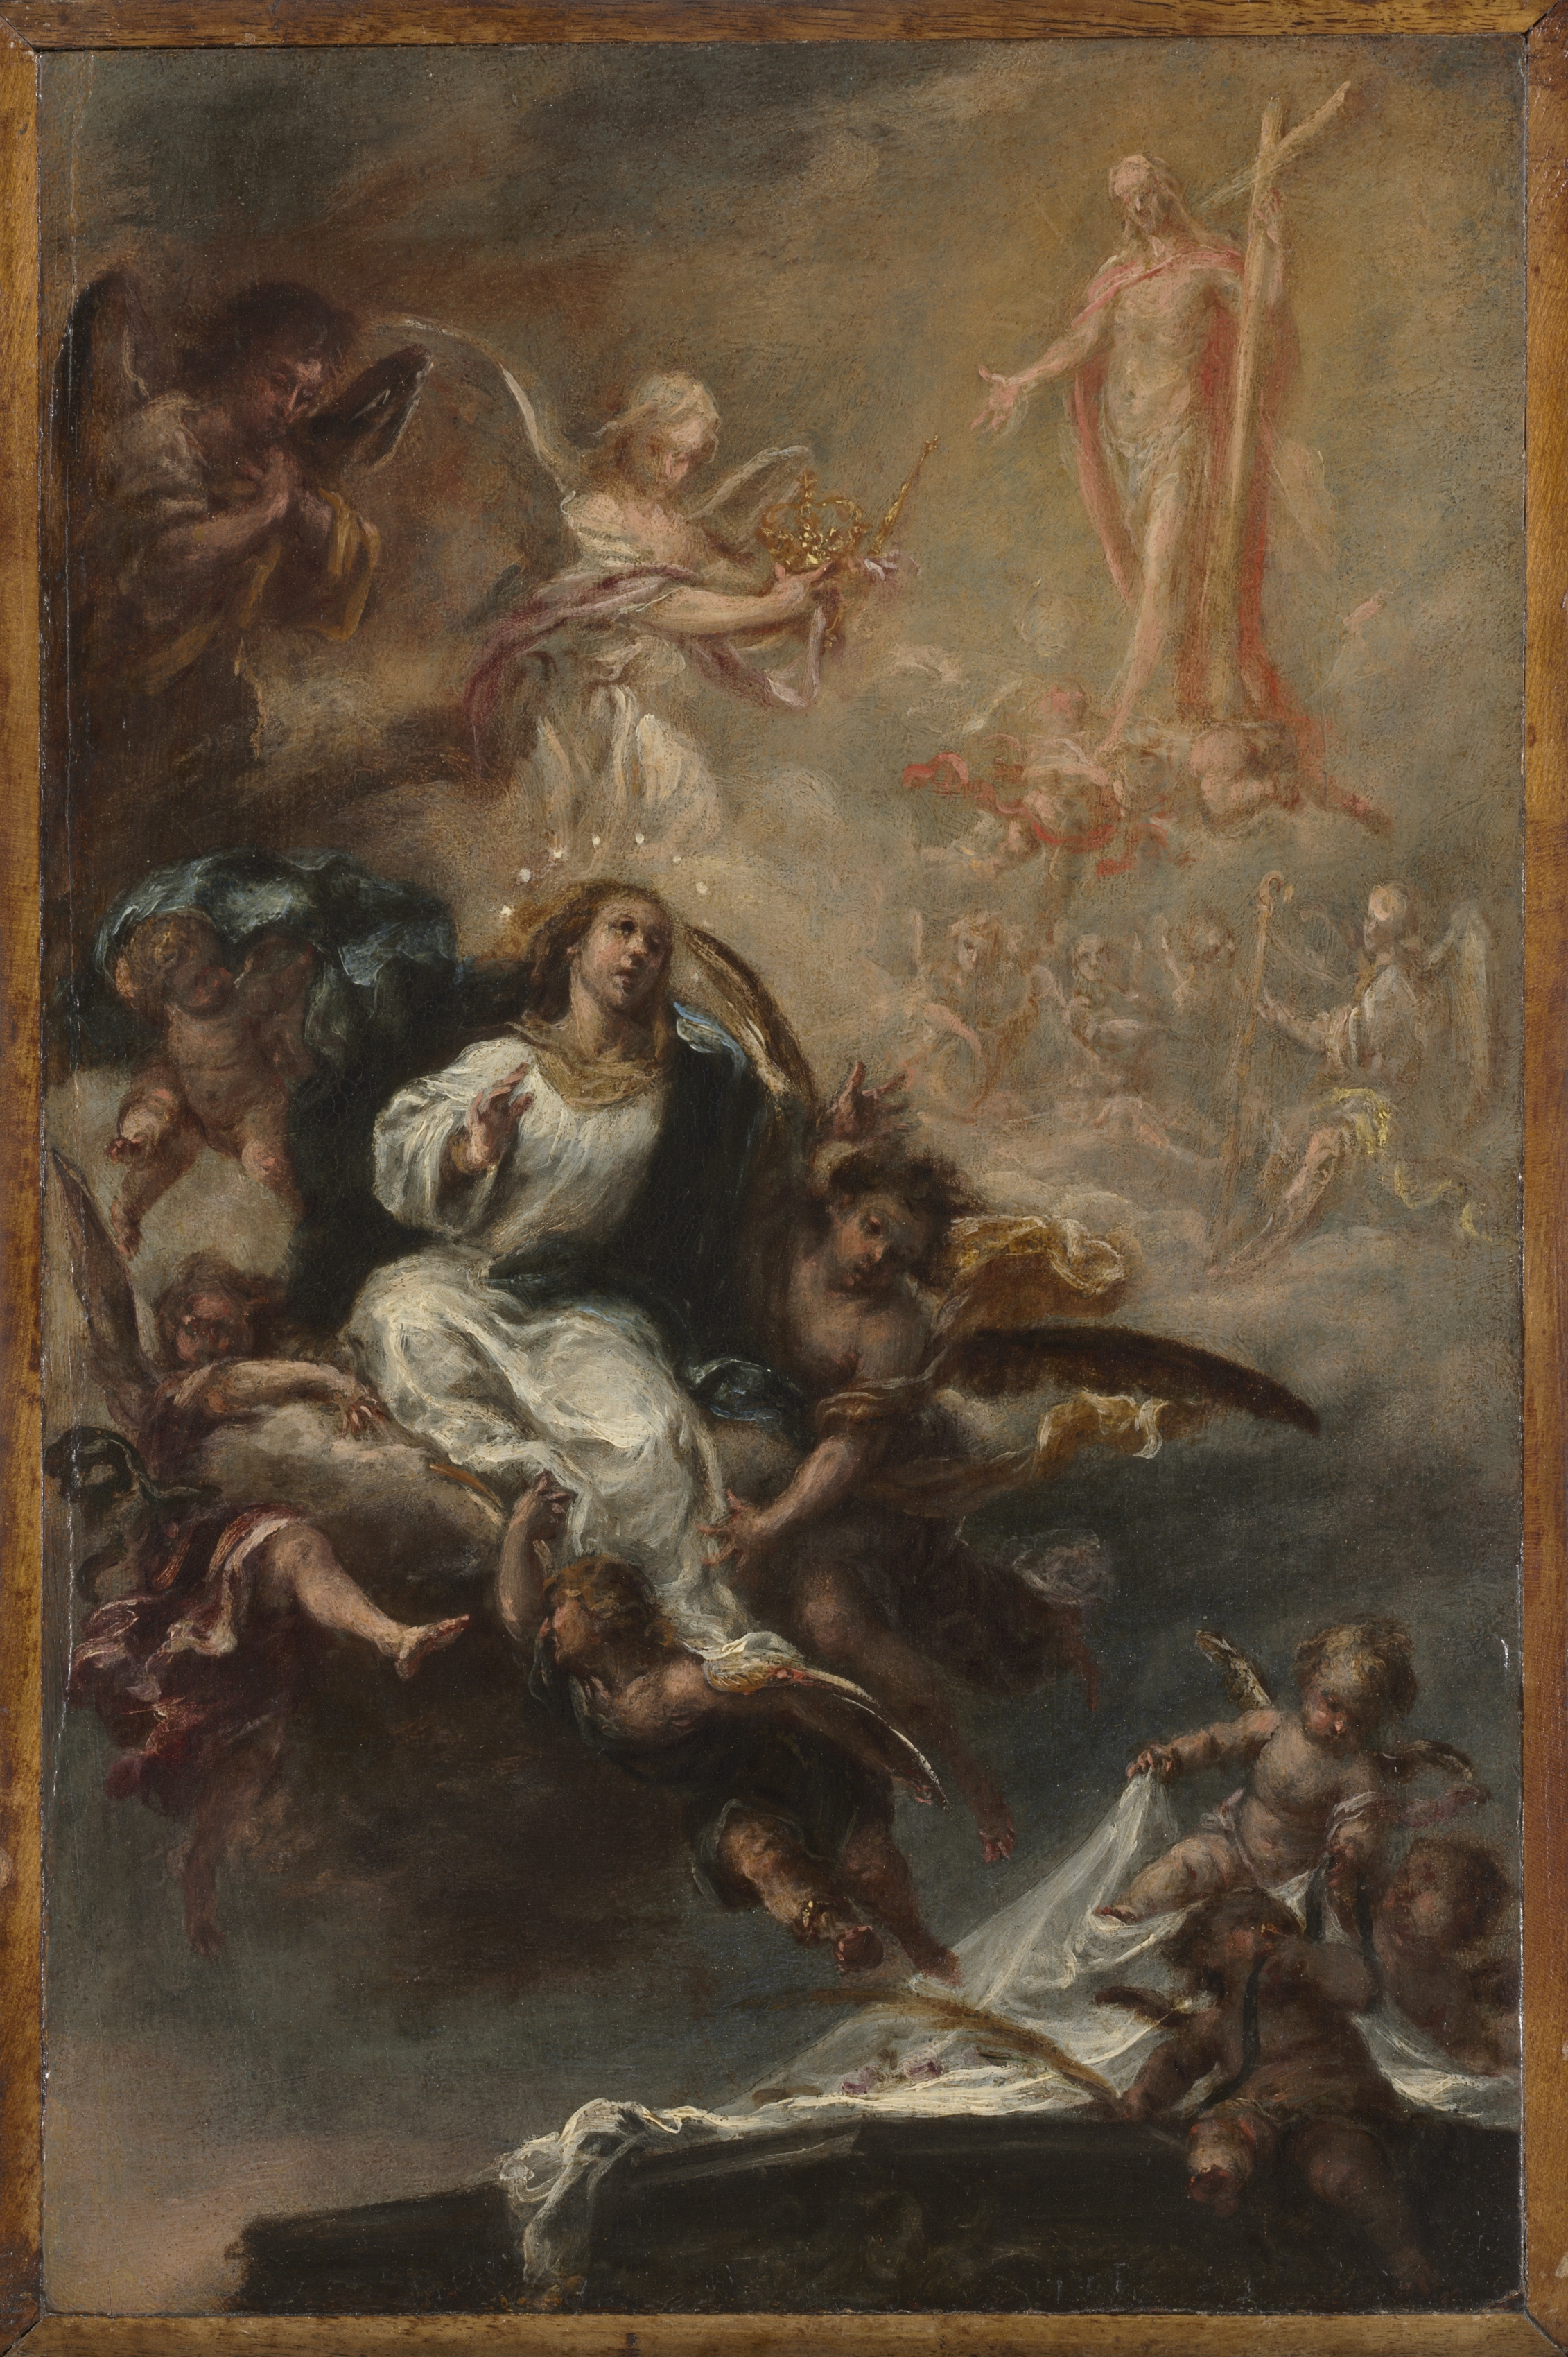 Study for "The Assumption of the Virgin" for San Augustín, Seville